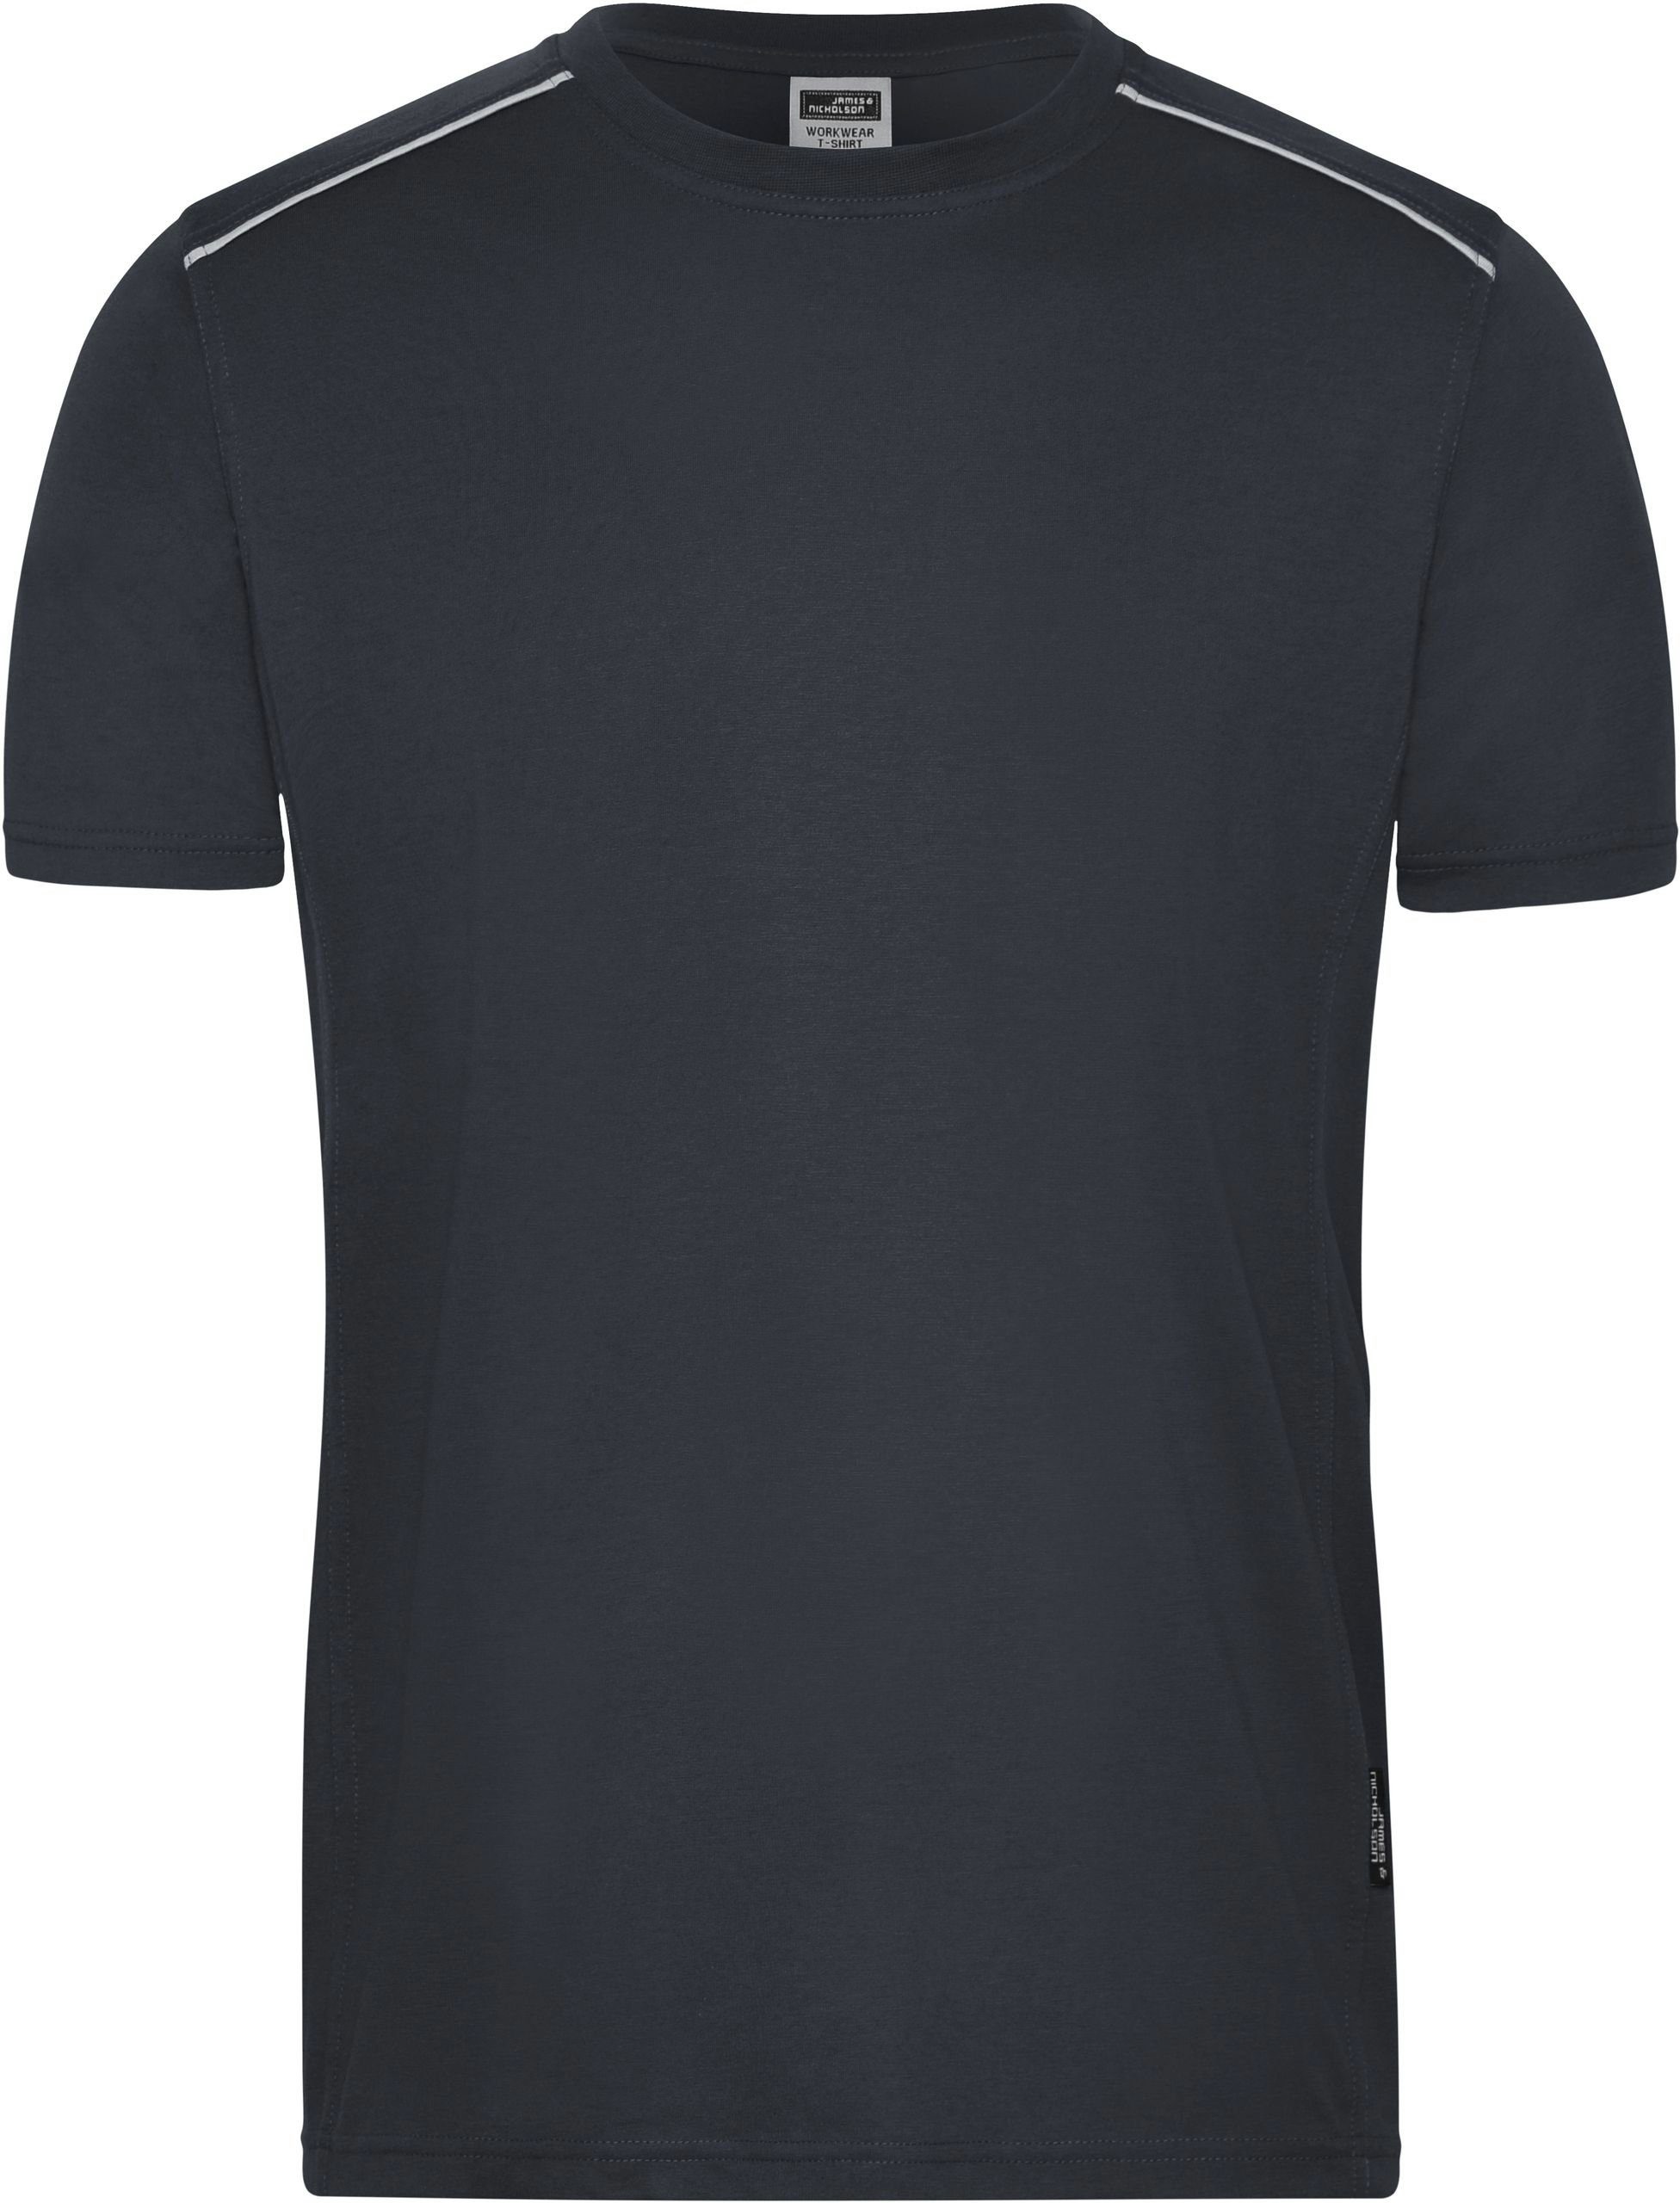 James & Nicholson Workwear Baumwolle FaS50890 T-Shirt Arbeits Navy -Solid- T-Shirt Bio